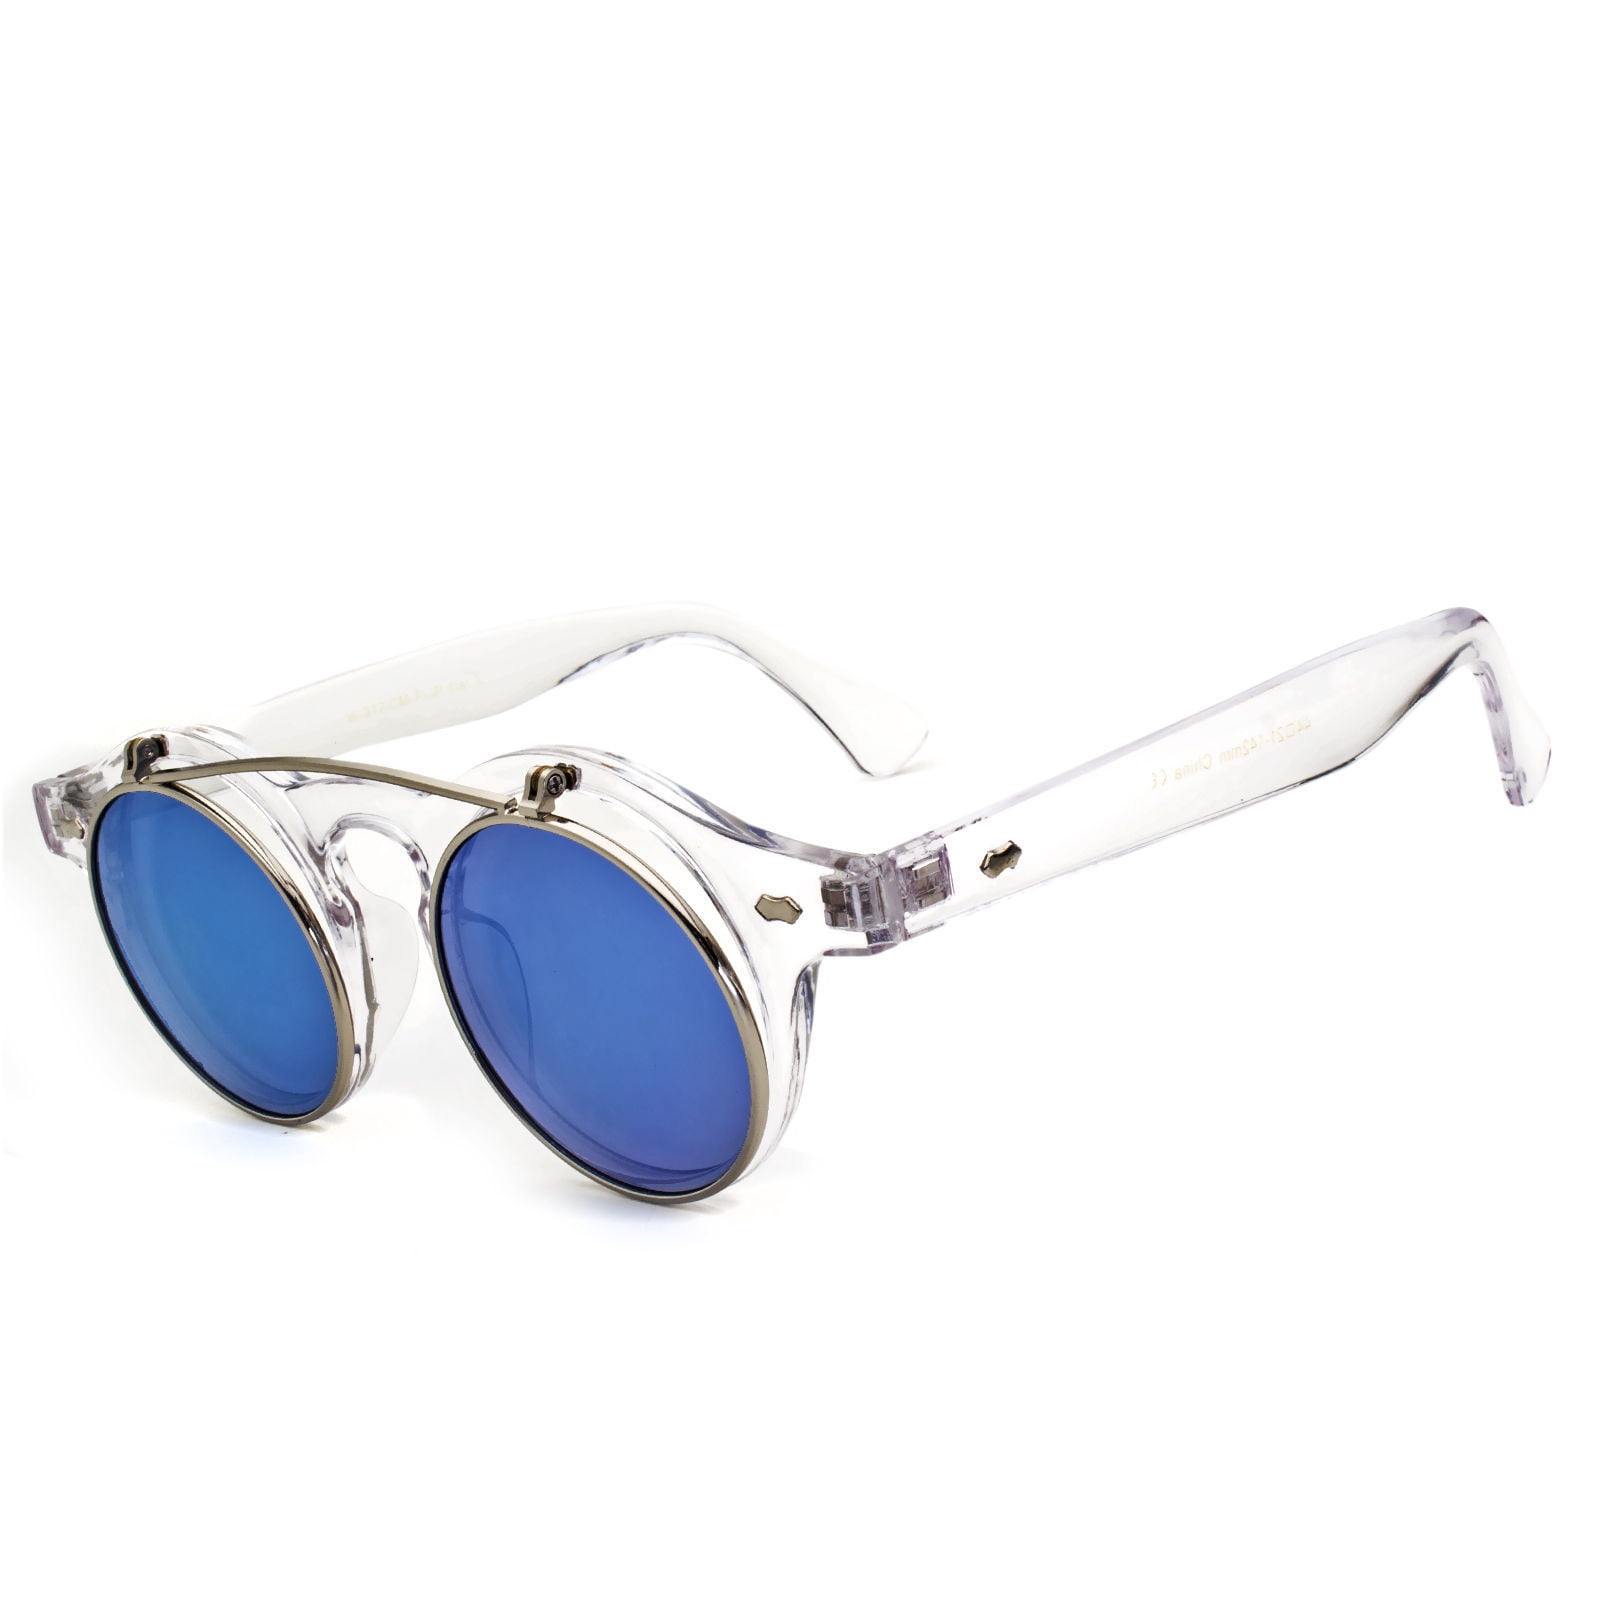 Django Inspired Urban Yellow Mirrored Lens Steampunk Round Flip Up Sunglasses 